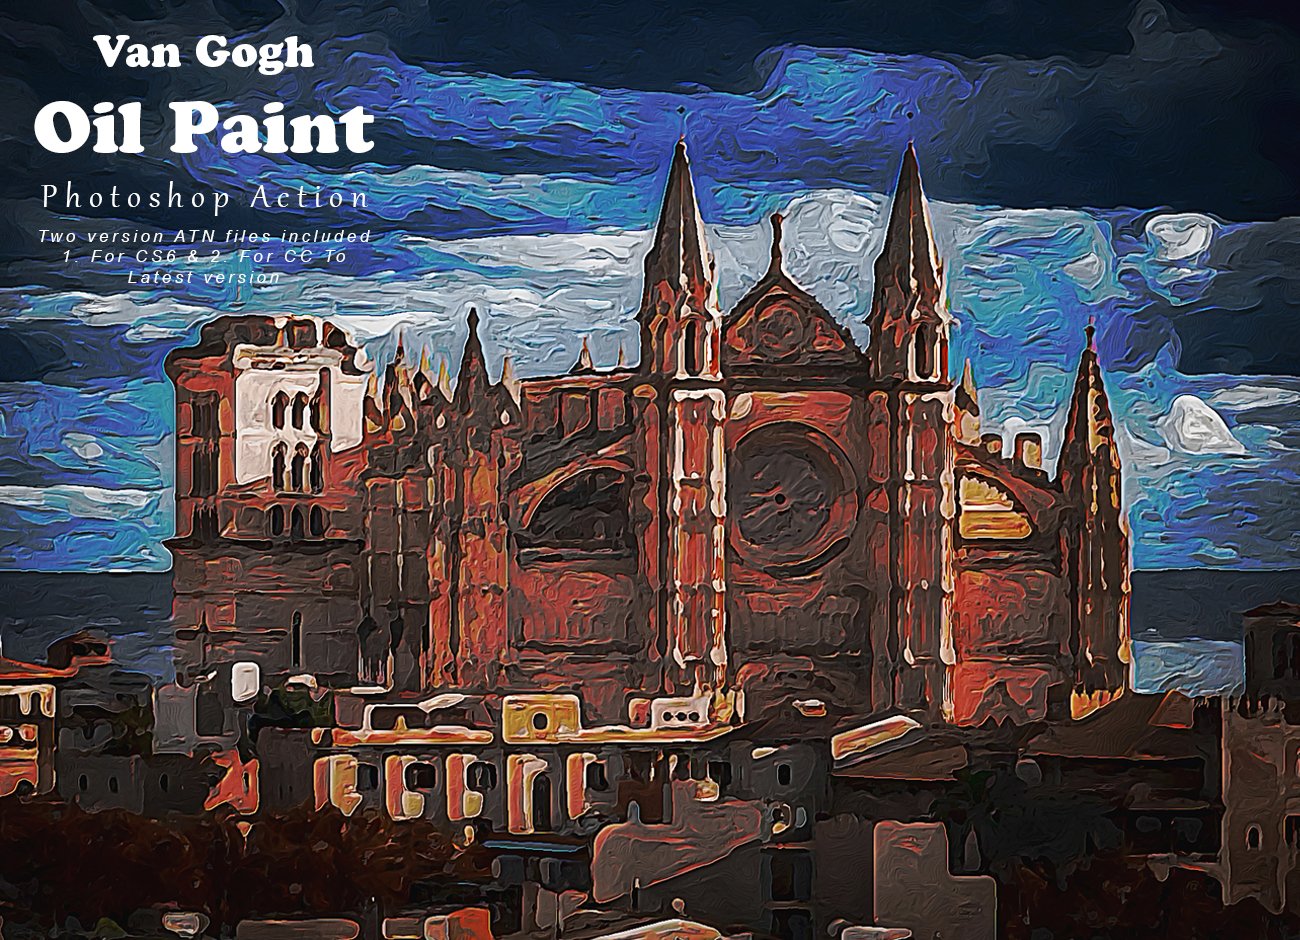 Van Gogh Oil Paint Photoshop Action cover image.